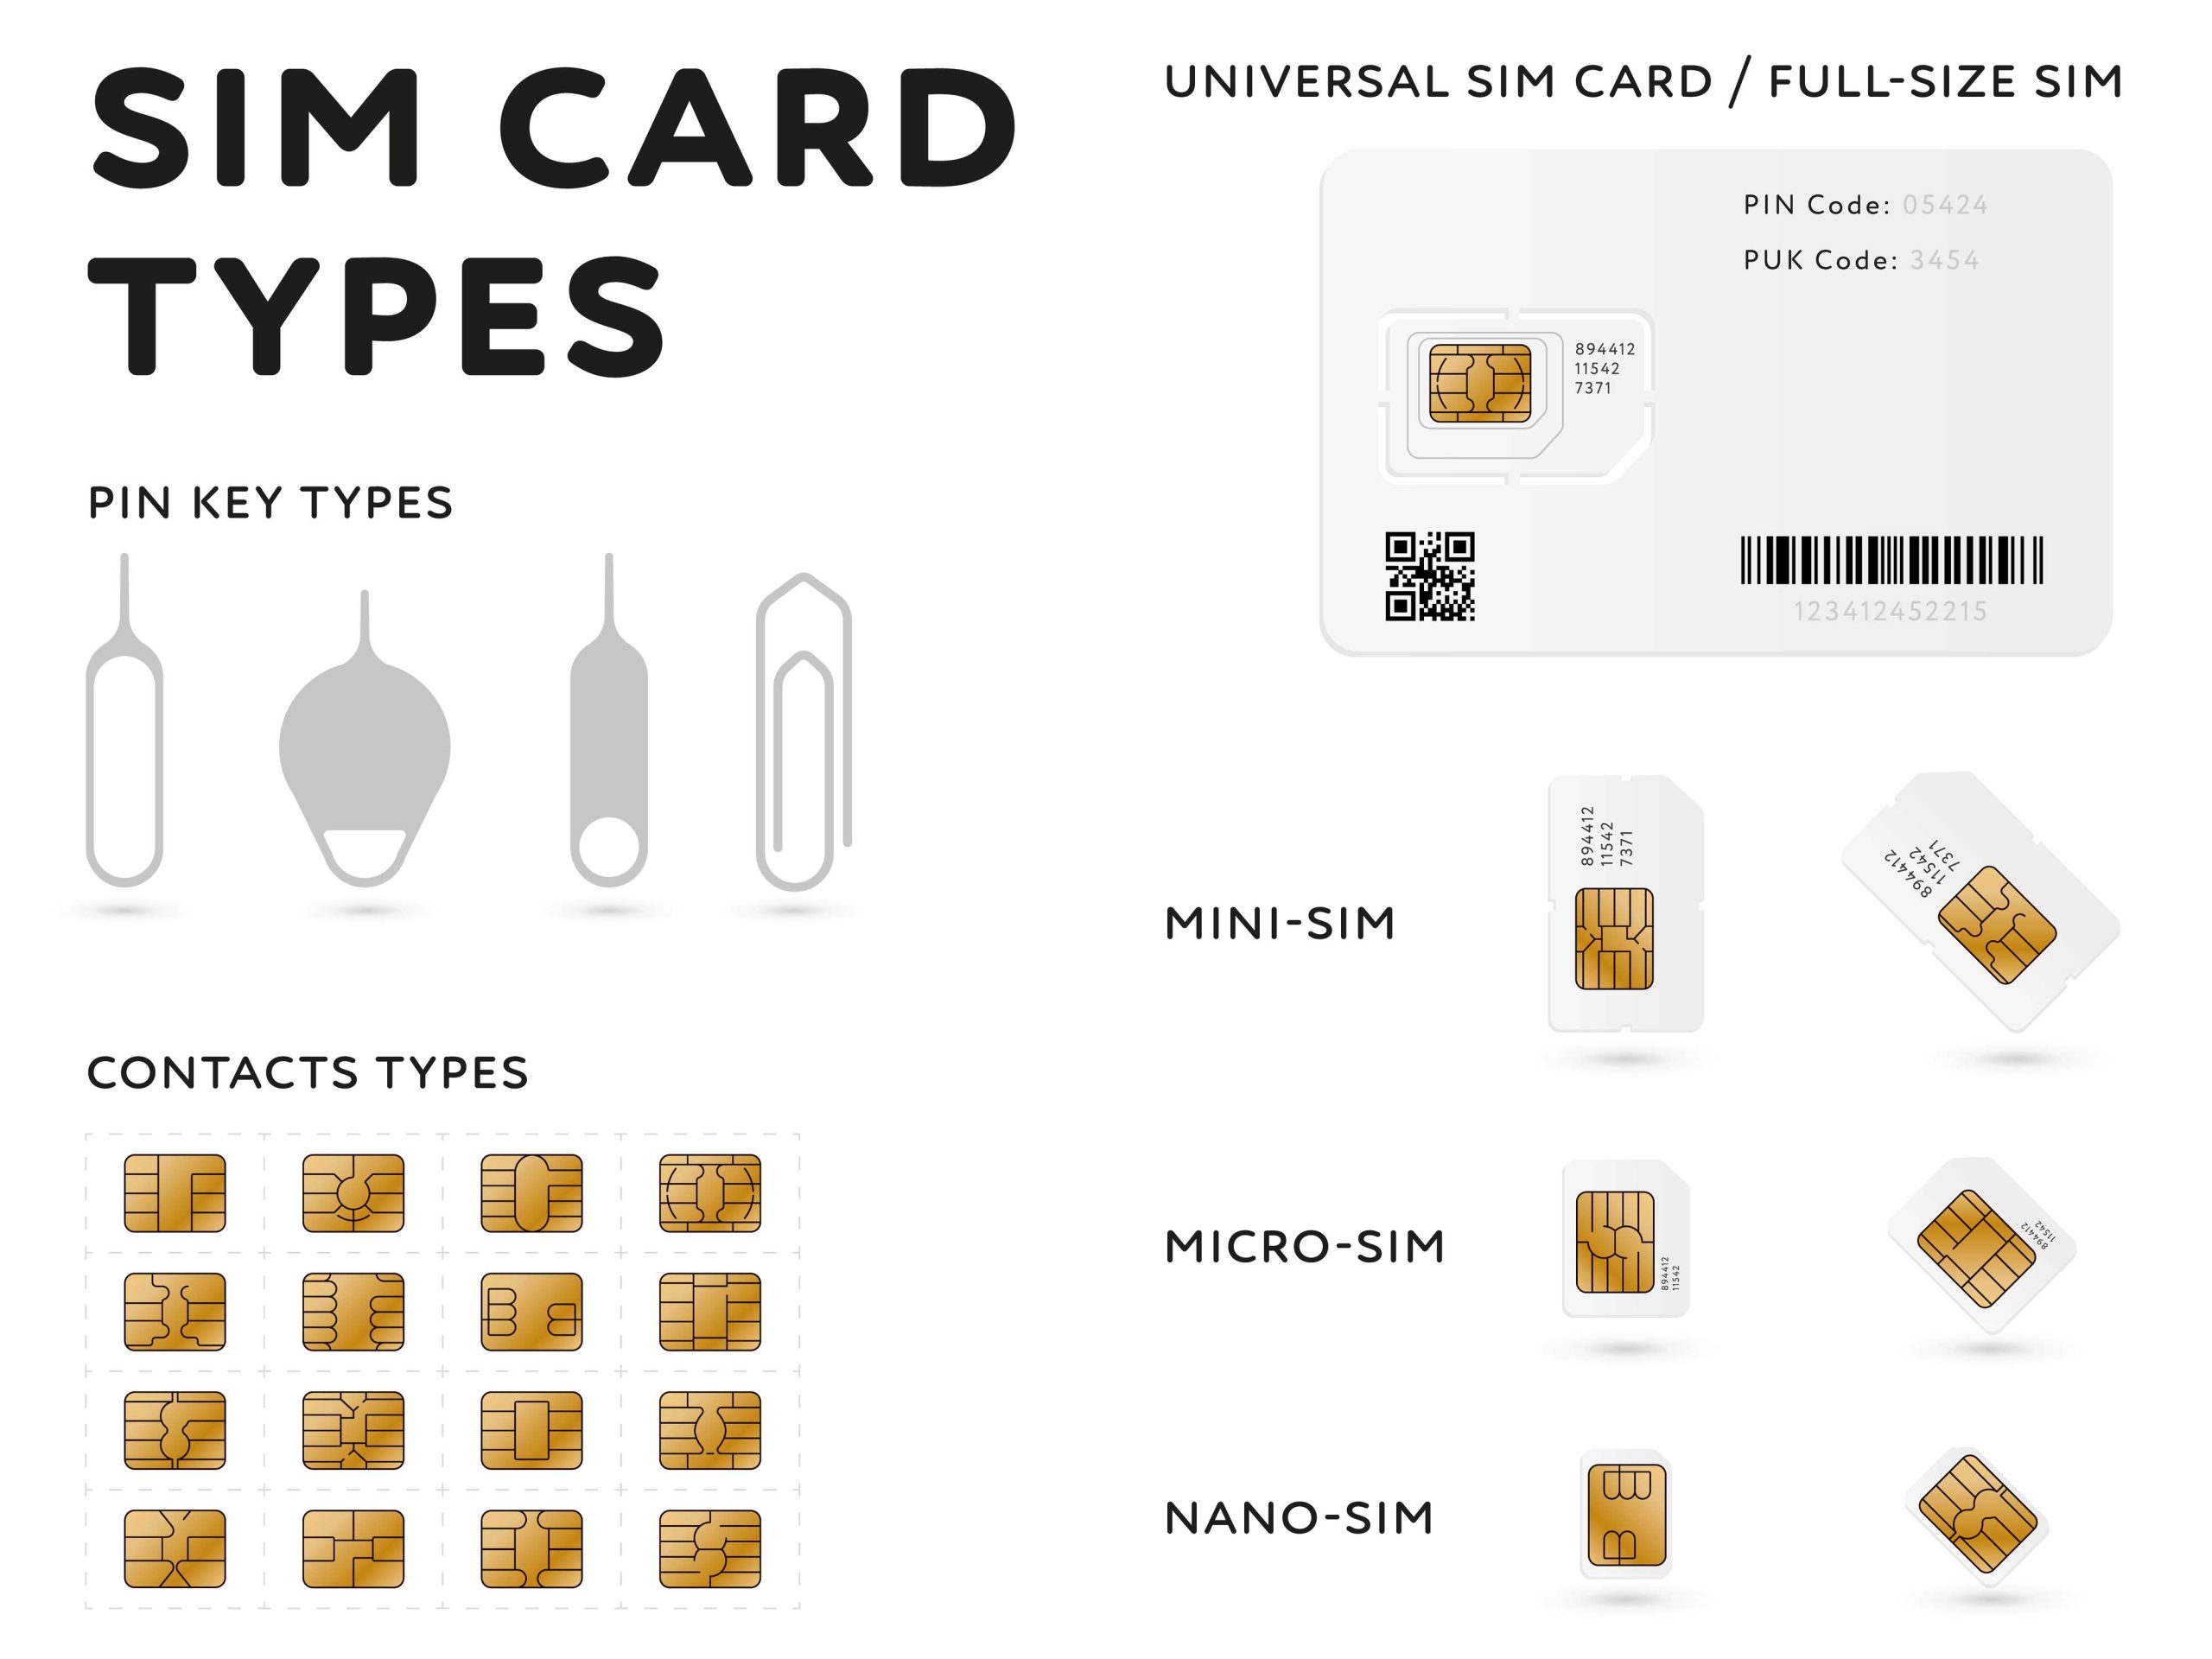 The three SIM card sizes